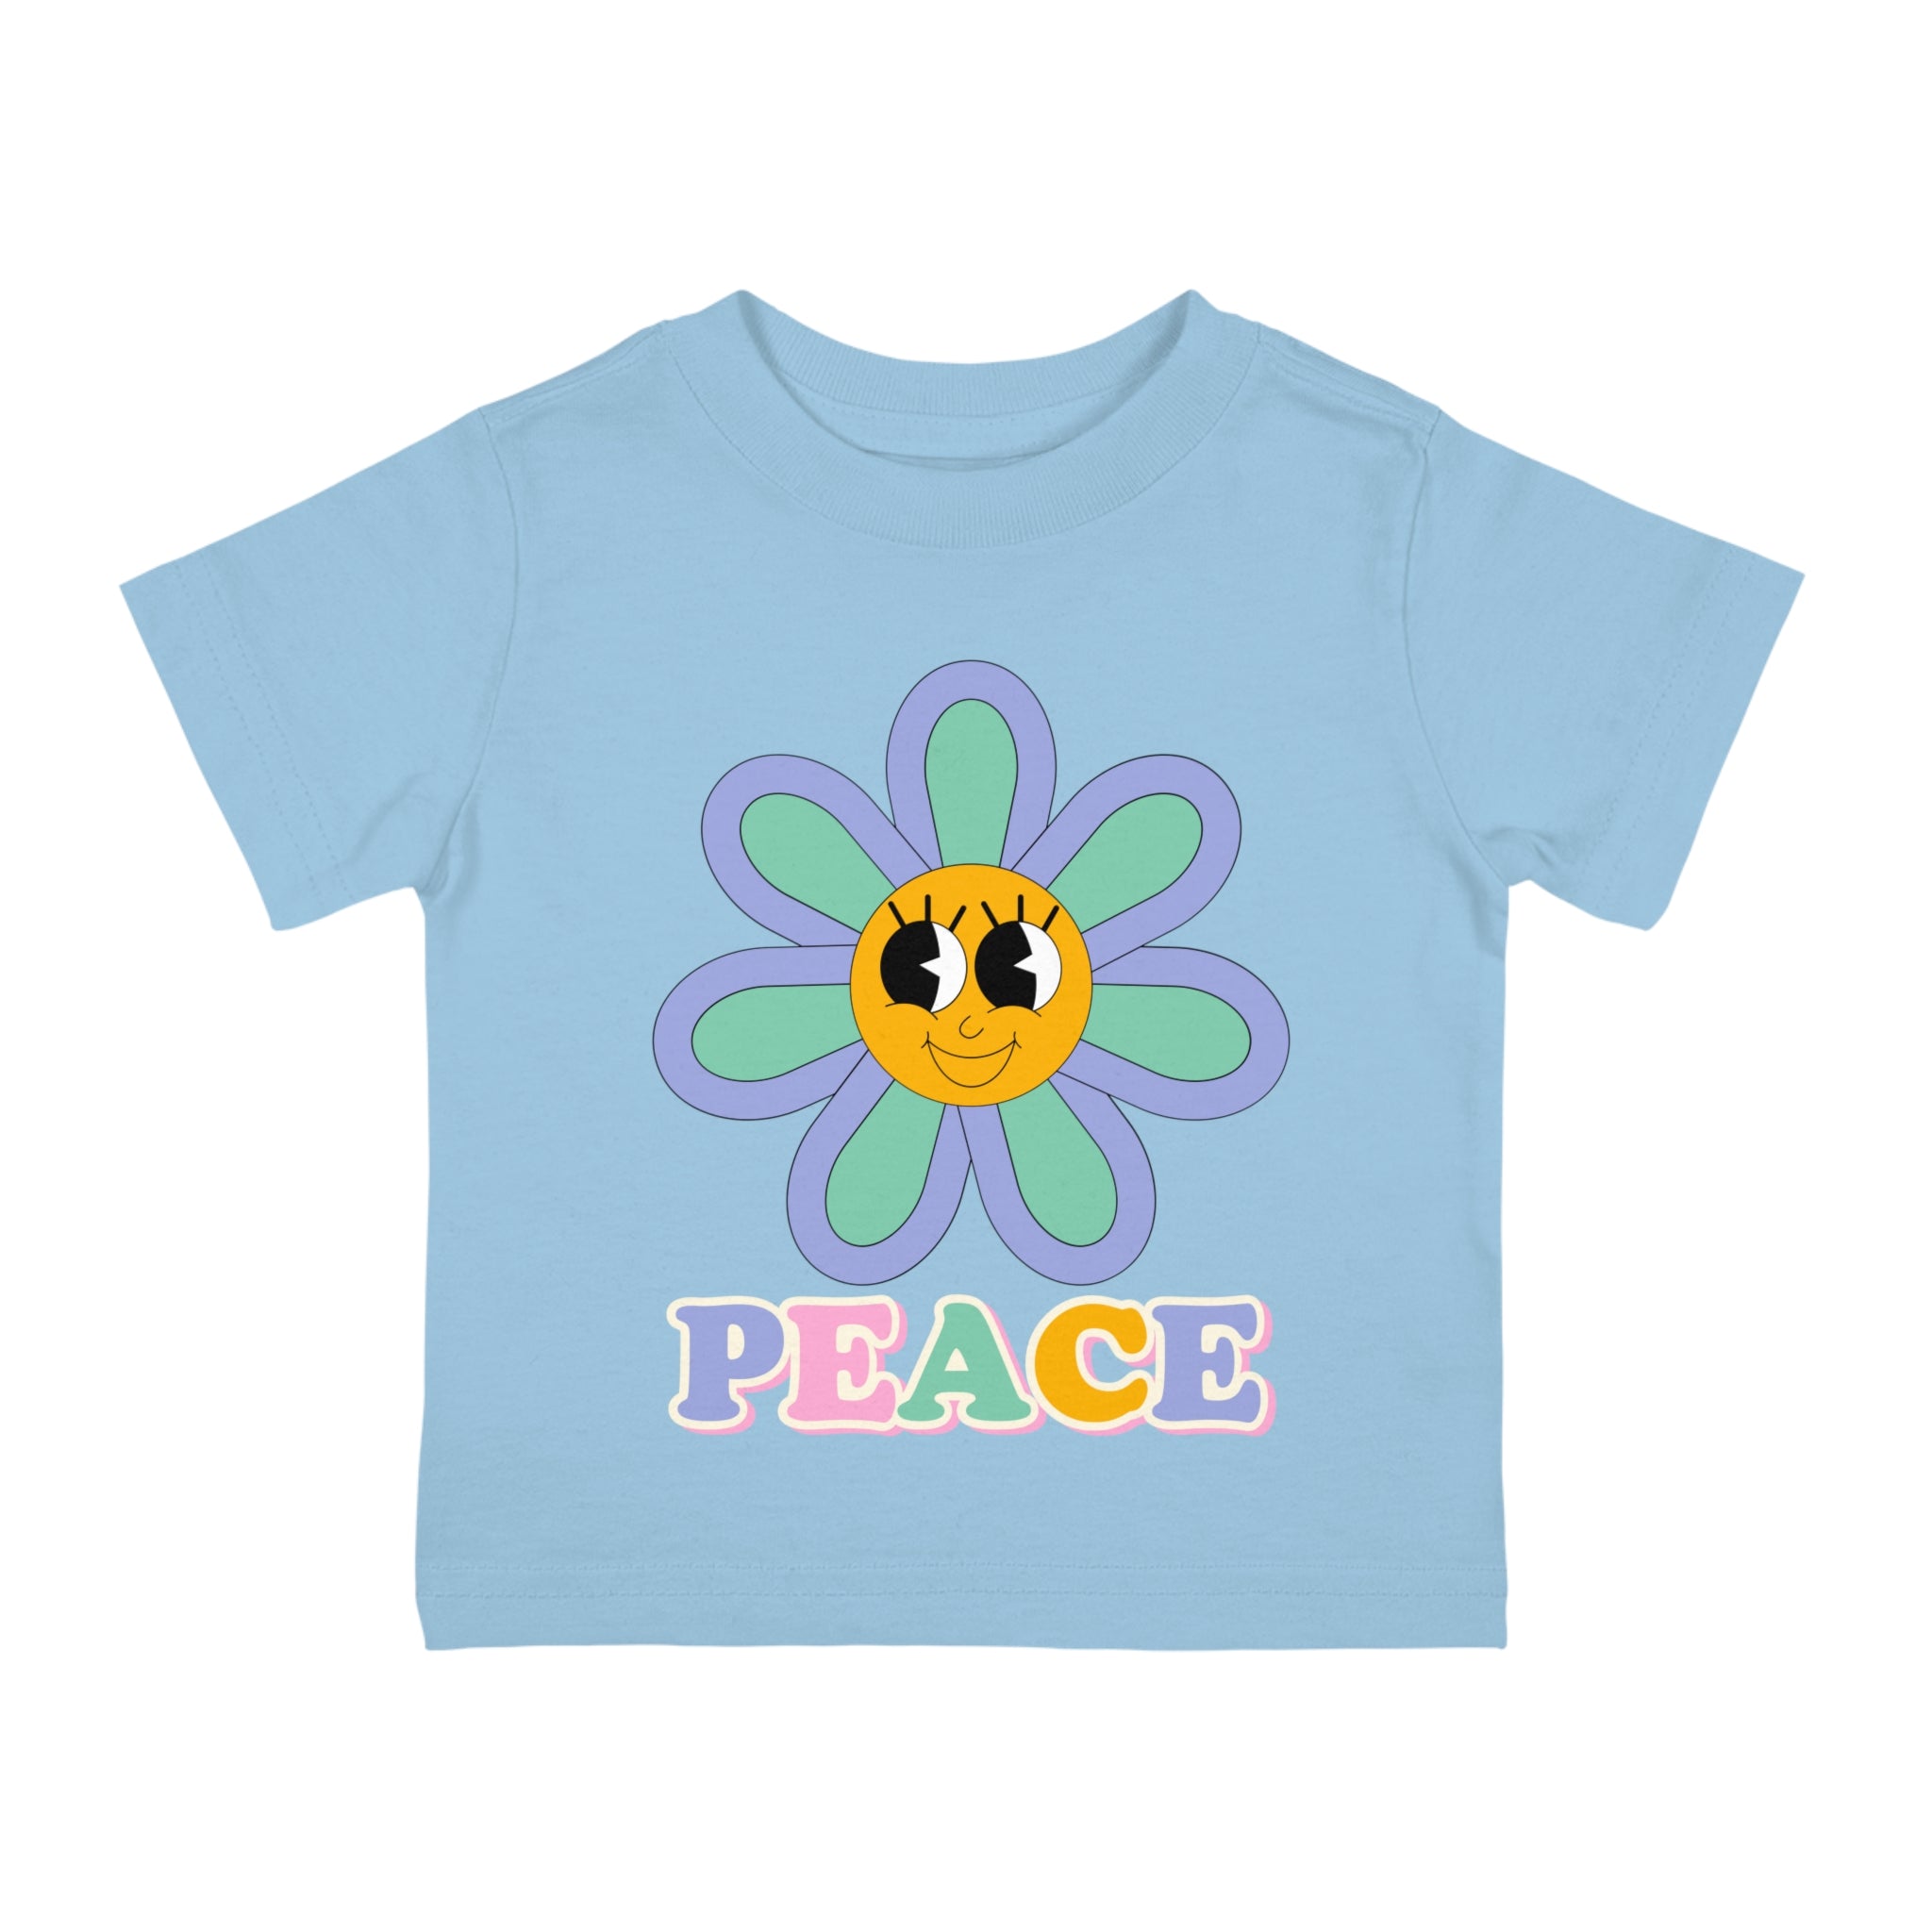 Peace flower Infant Shirt, Baby Tee, Infant Tee